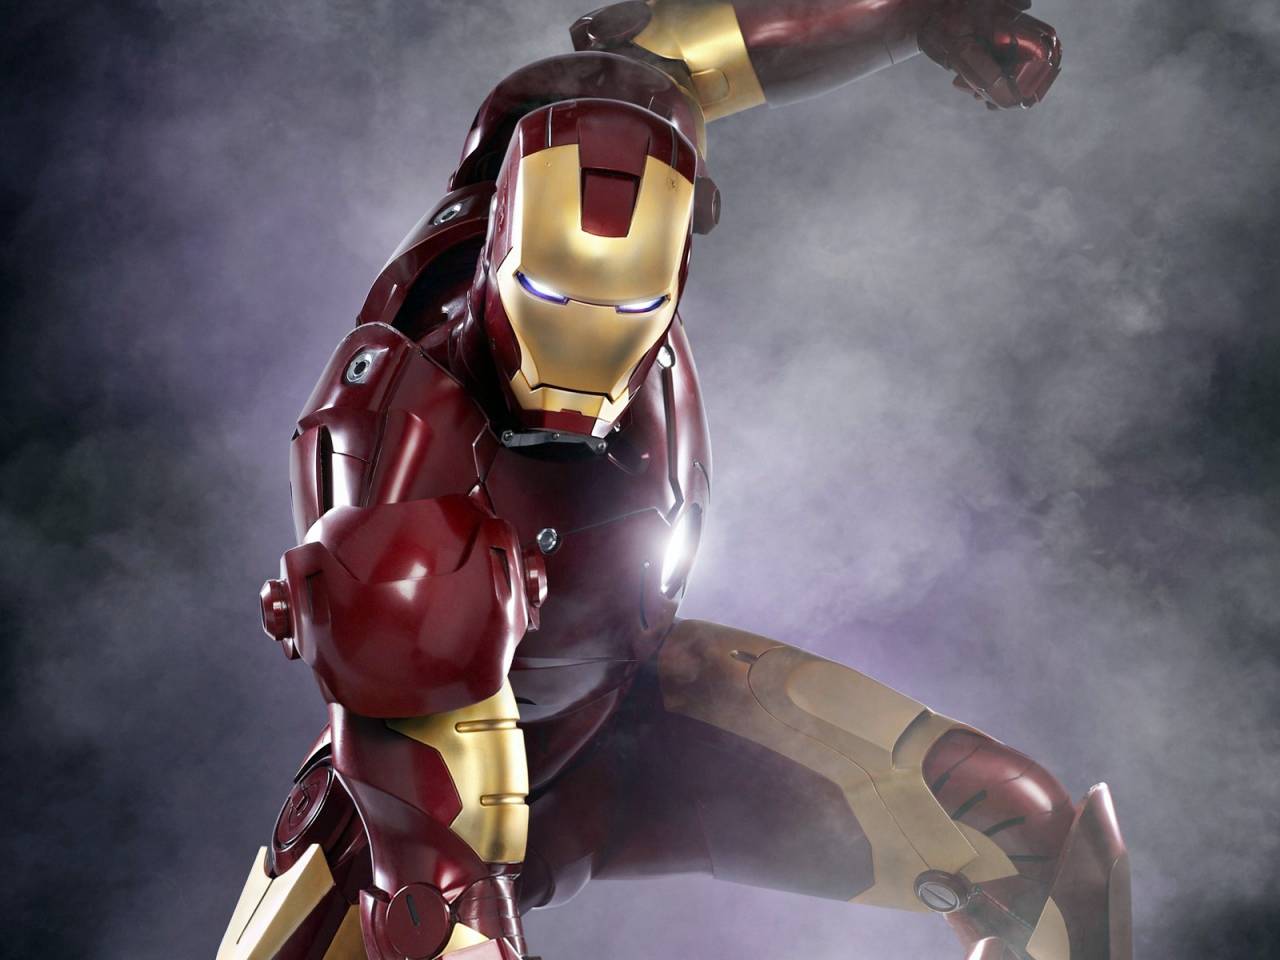 Free Iron Man 3 Movie Wallpaper For Dekstop | Wallpicshd